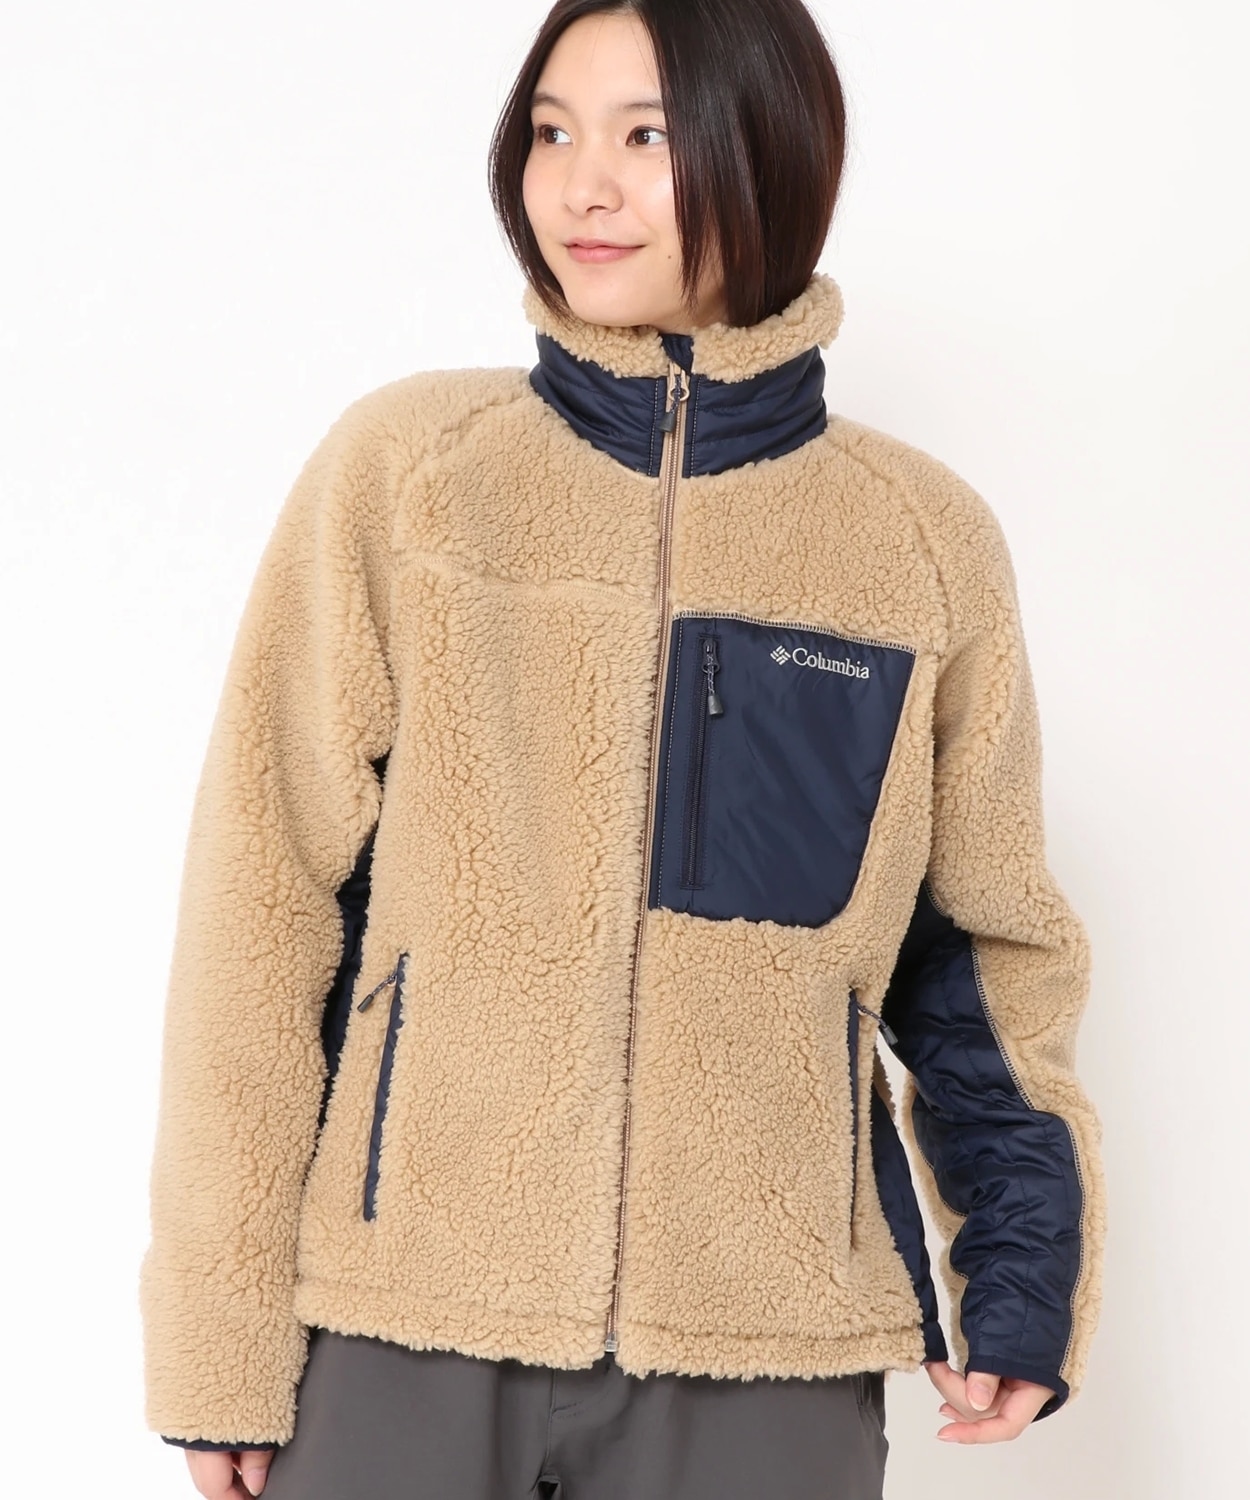 Brown/Beige M discount 96% Promod blazer WOMEN FASHION Jackets Embroidery 